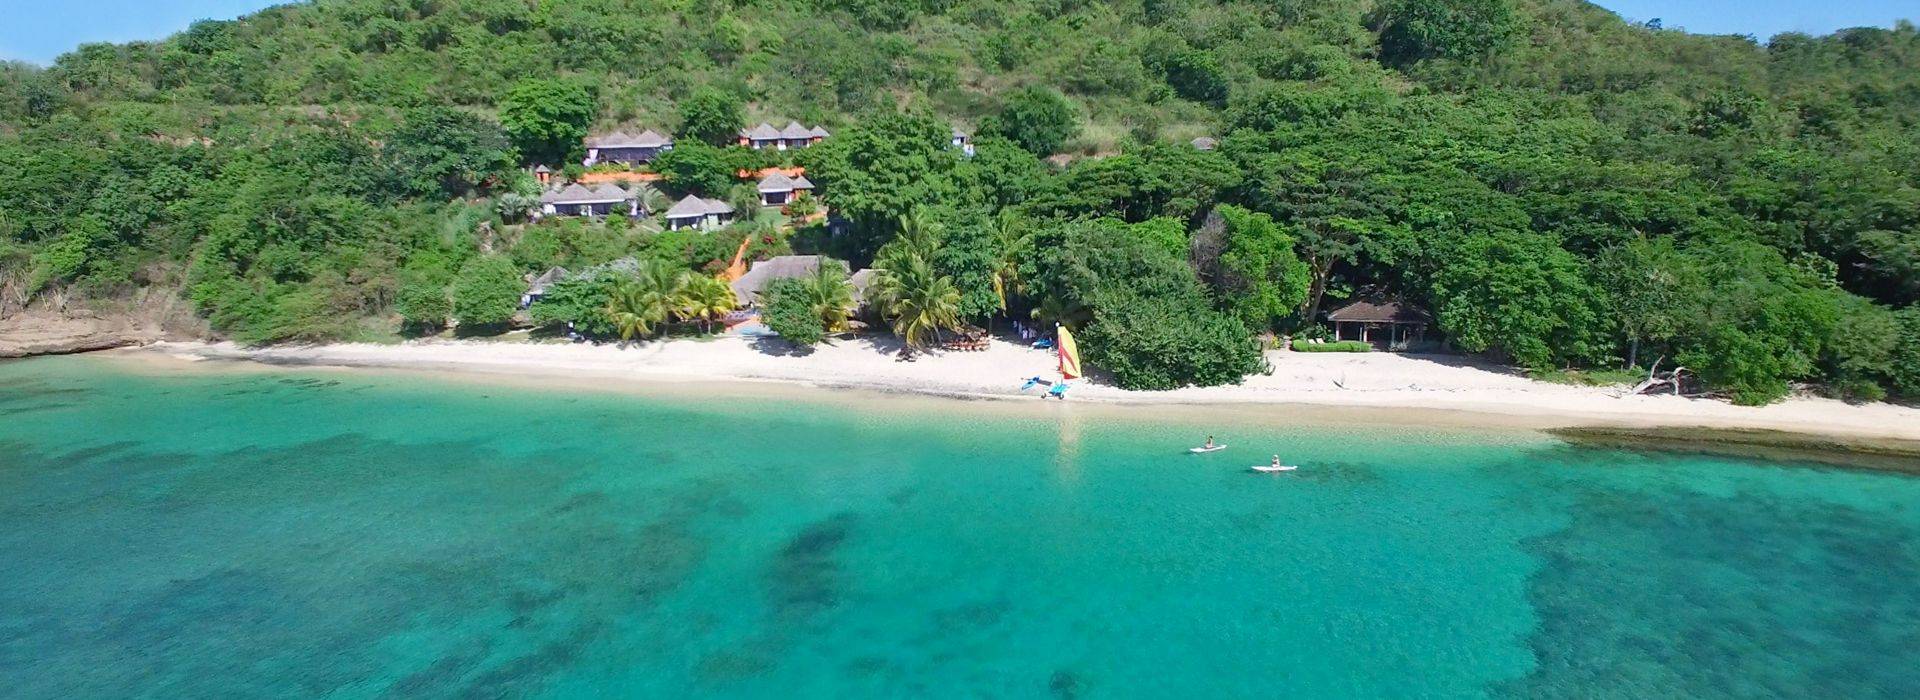 laluna beach resort and villas on the island of Grenada